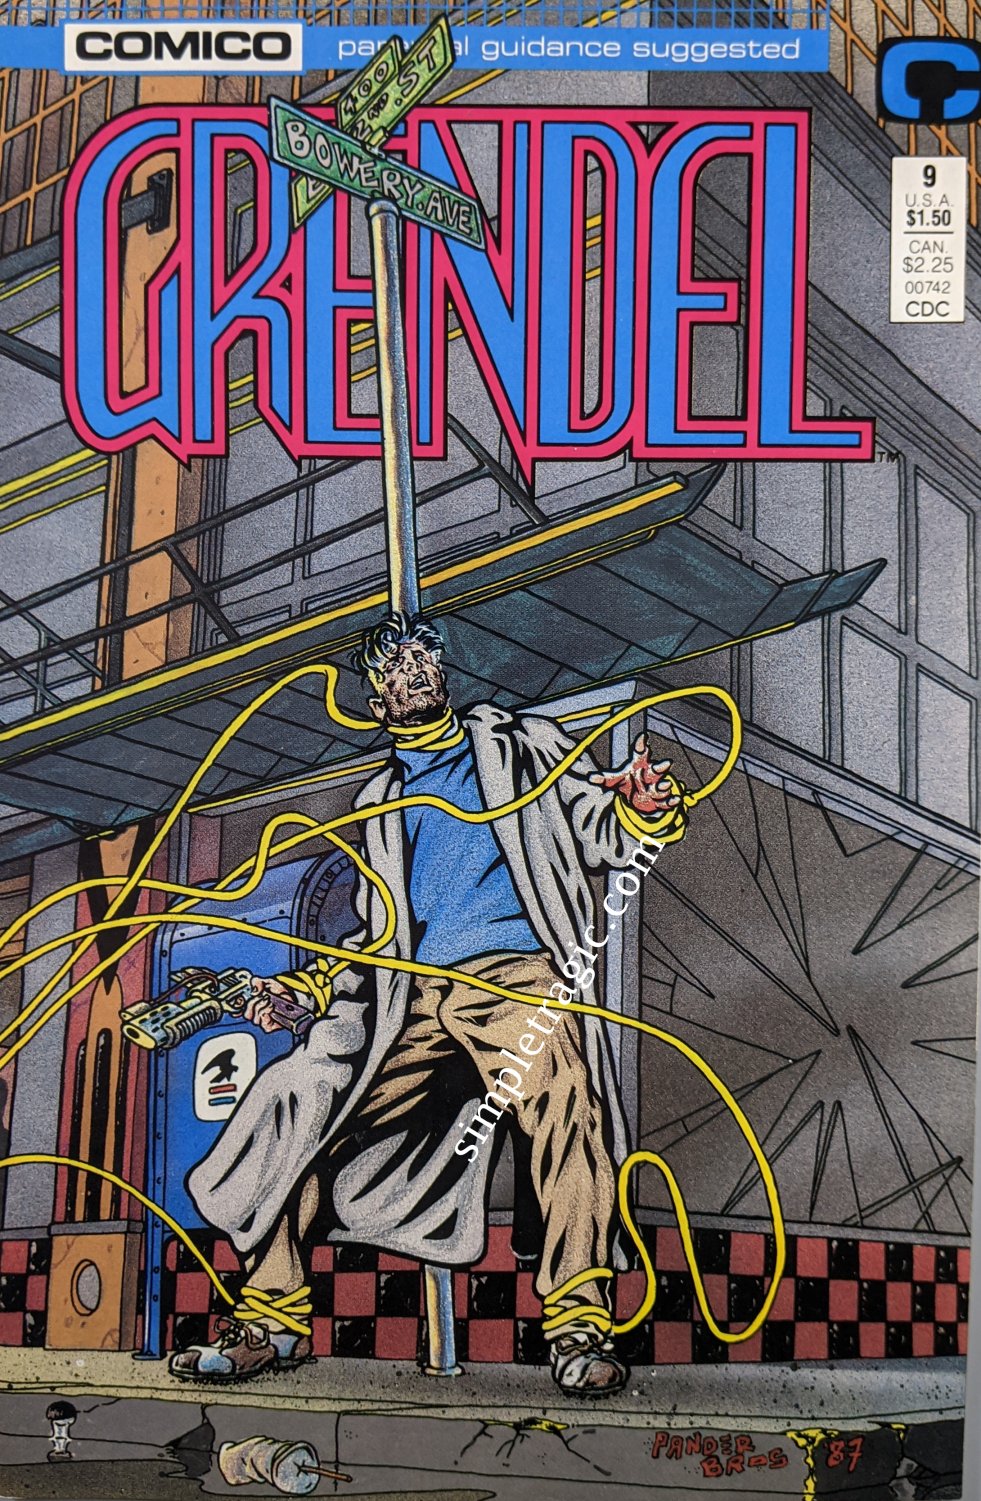 Grendel #9 Comic Book Cover Art by Pander Bros.